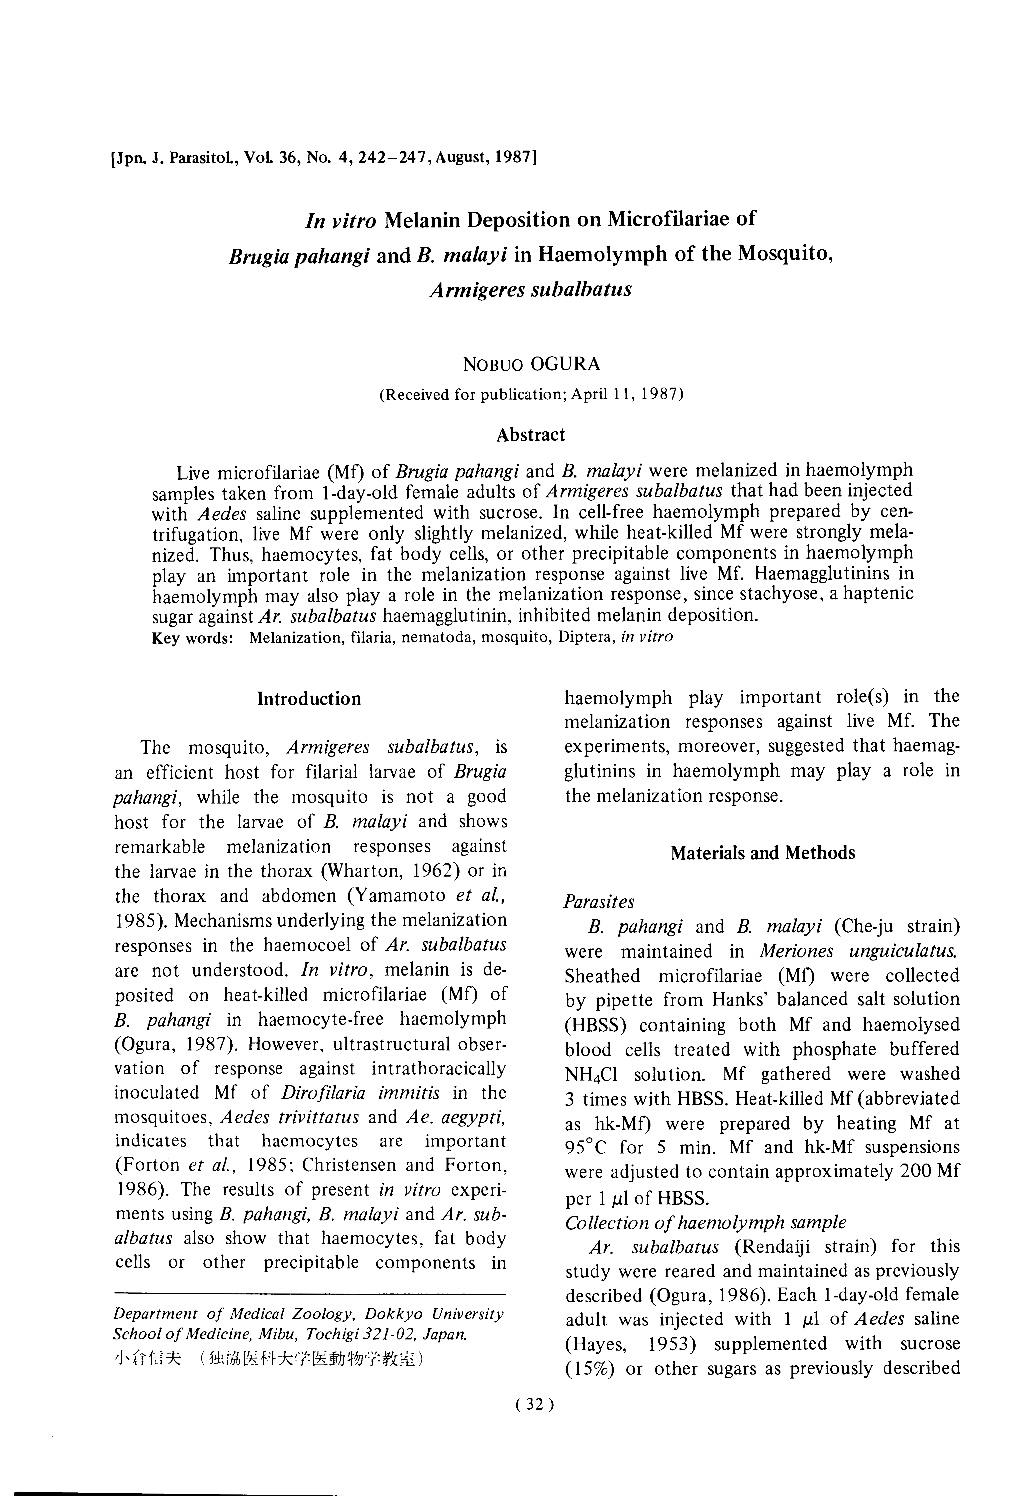 In Vitro Melanin Deposition on Microfilariae of Brugia Pahangi and B